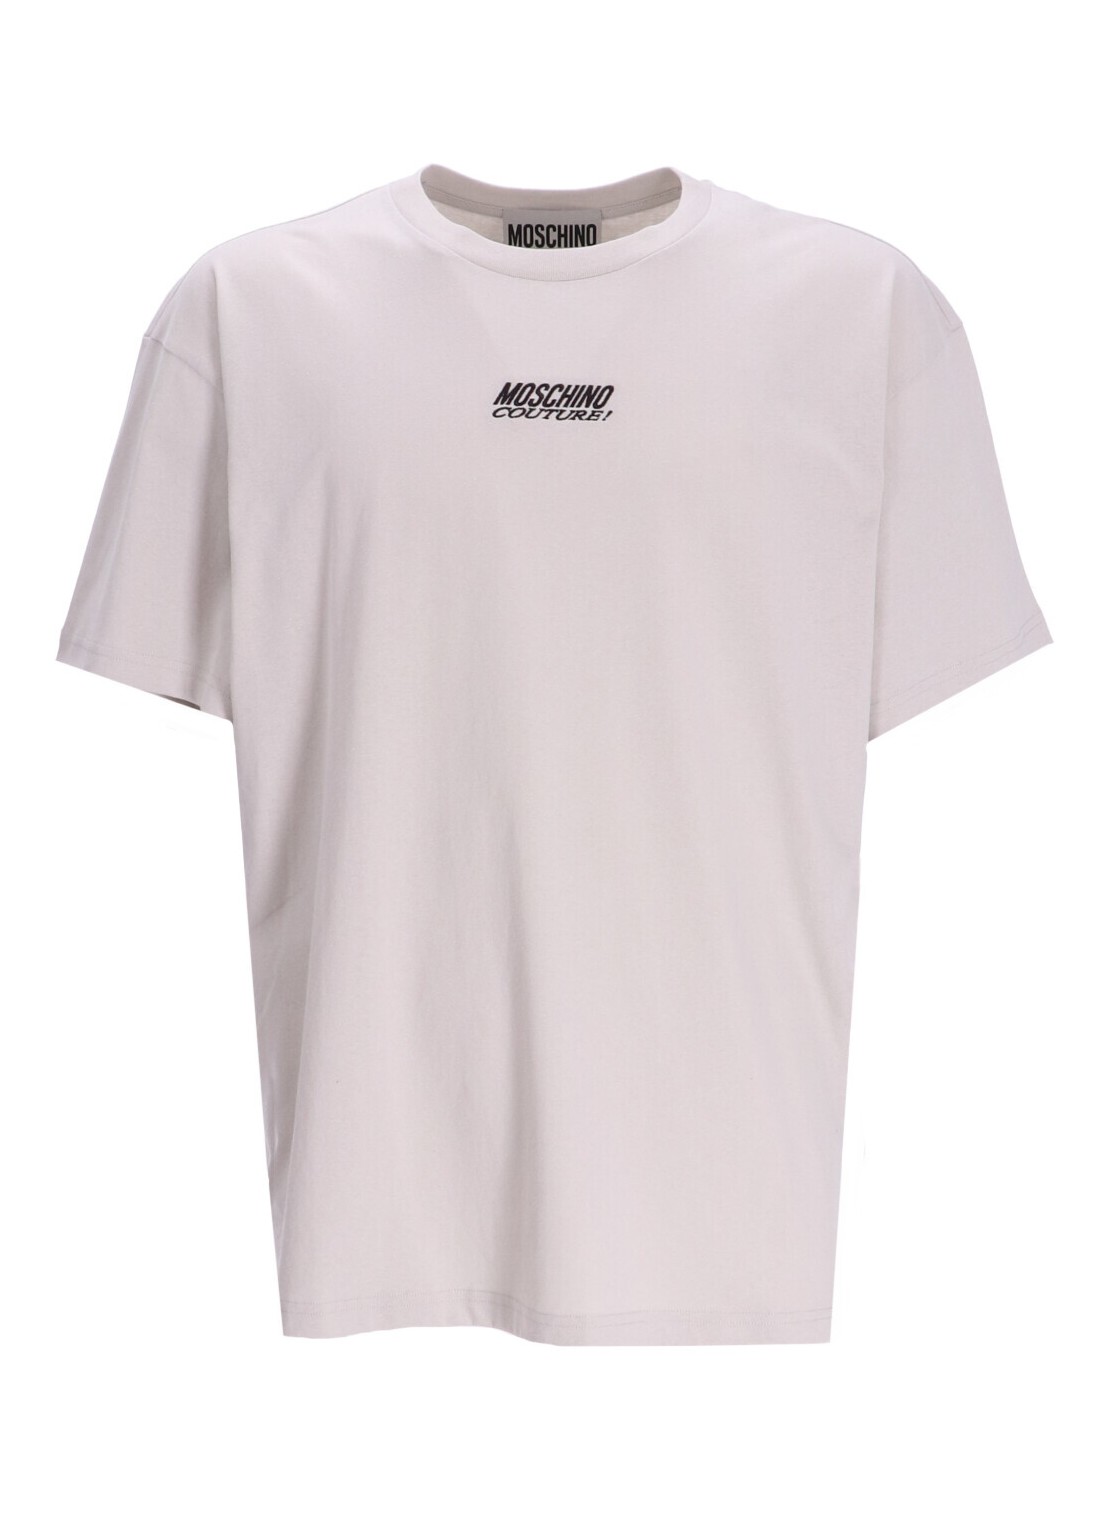 Camiseta moschino couture t-shirt man t-shirt 07202040 a1471 talla gris
 